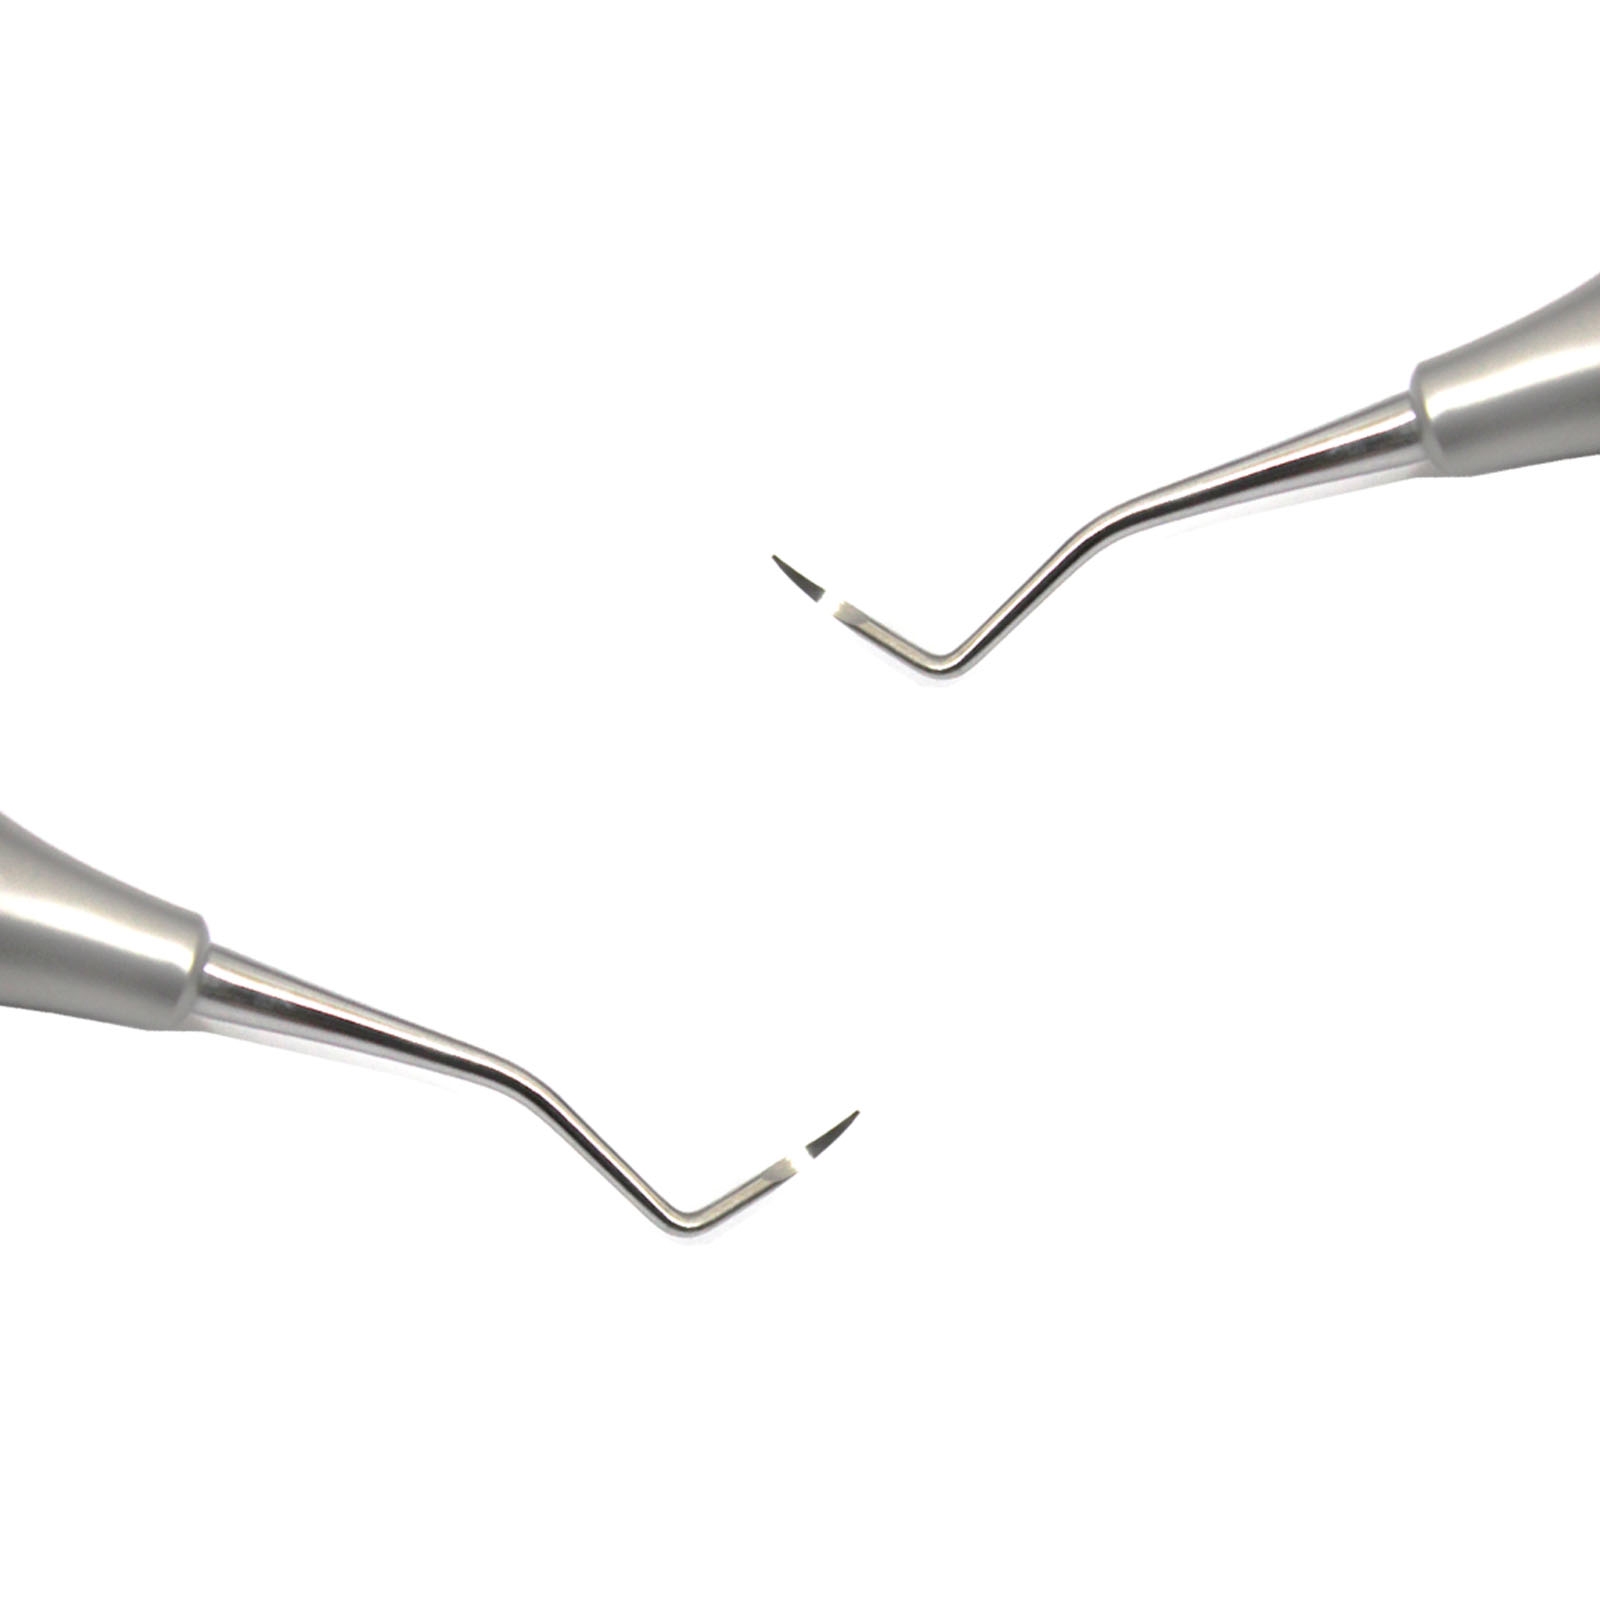 SICKLE SCALER 13s-14s Dental Hygiene - Dent Supply Periodontics Hollow Handle Steel Instruments -1112